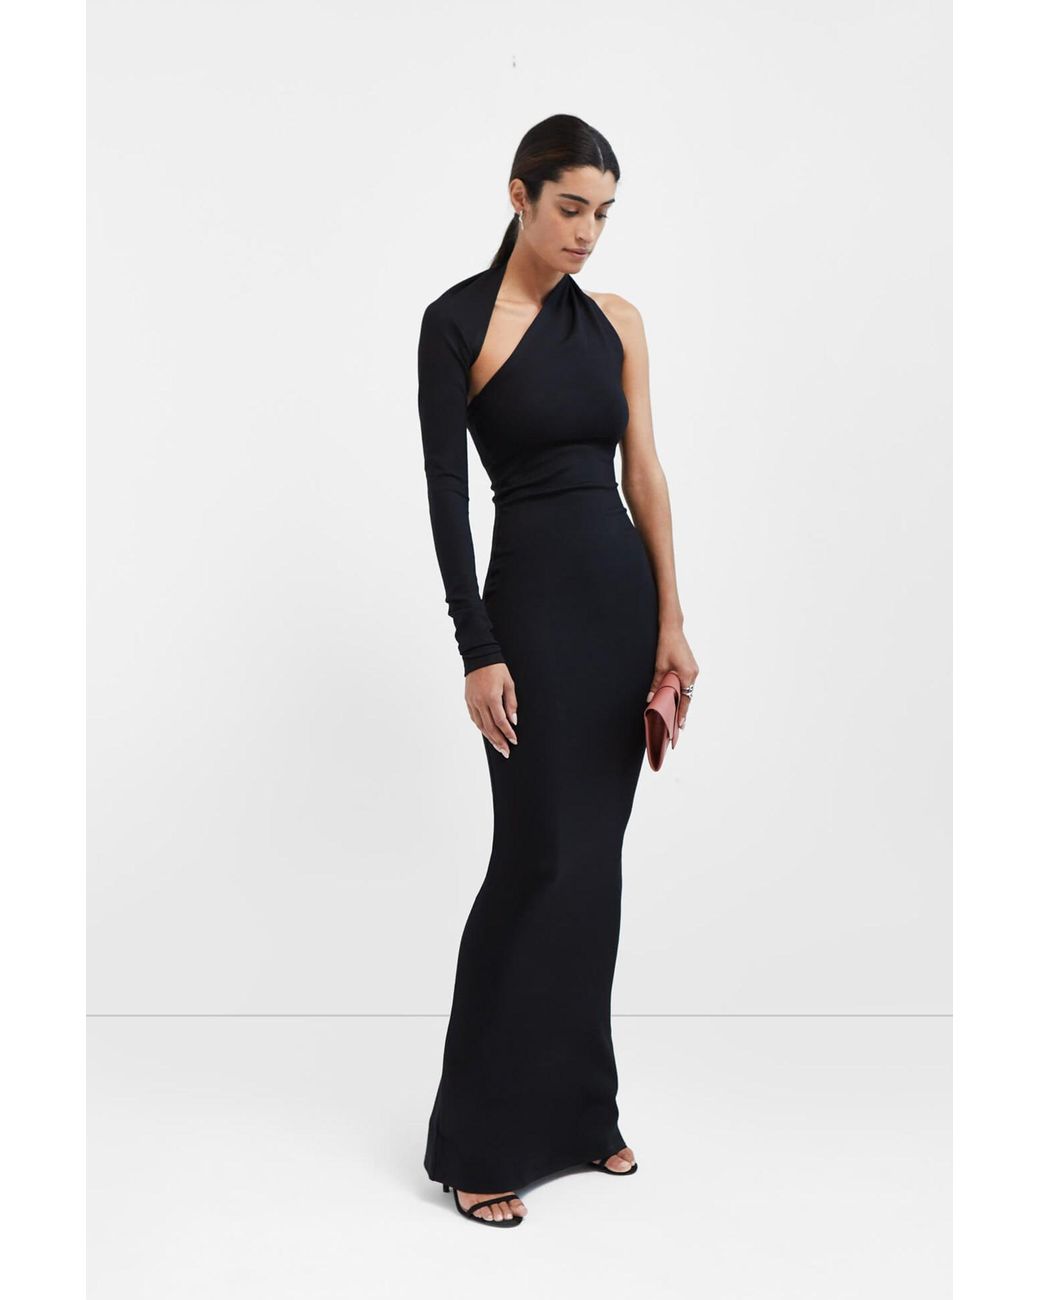 MARCELLA Manhattan Dress in Black | Lyst